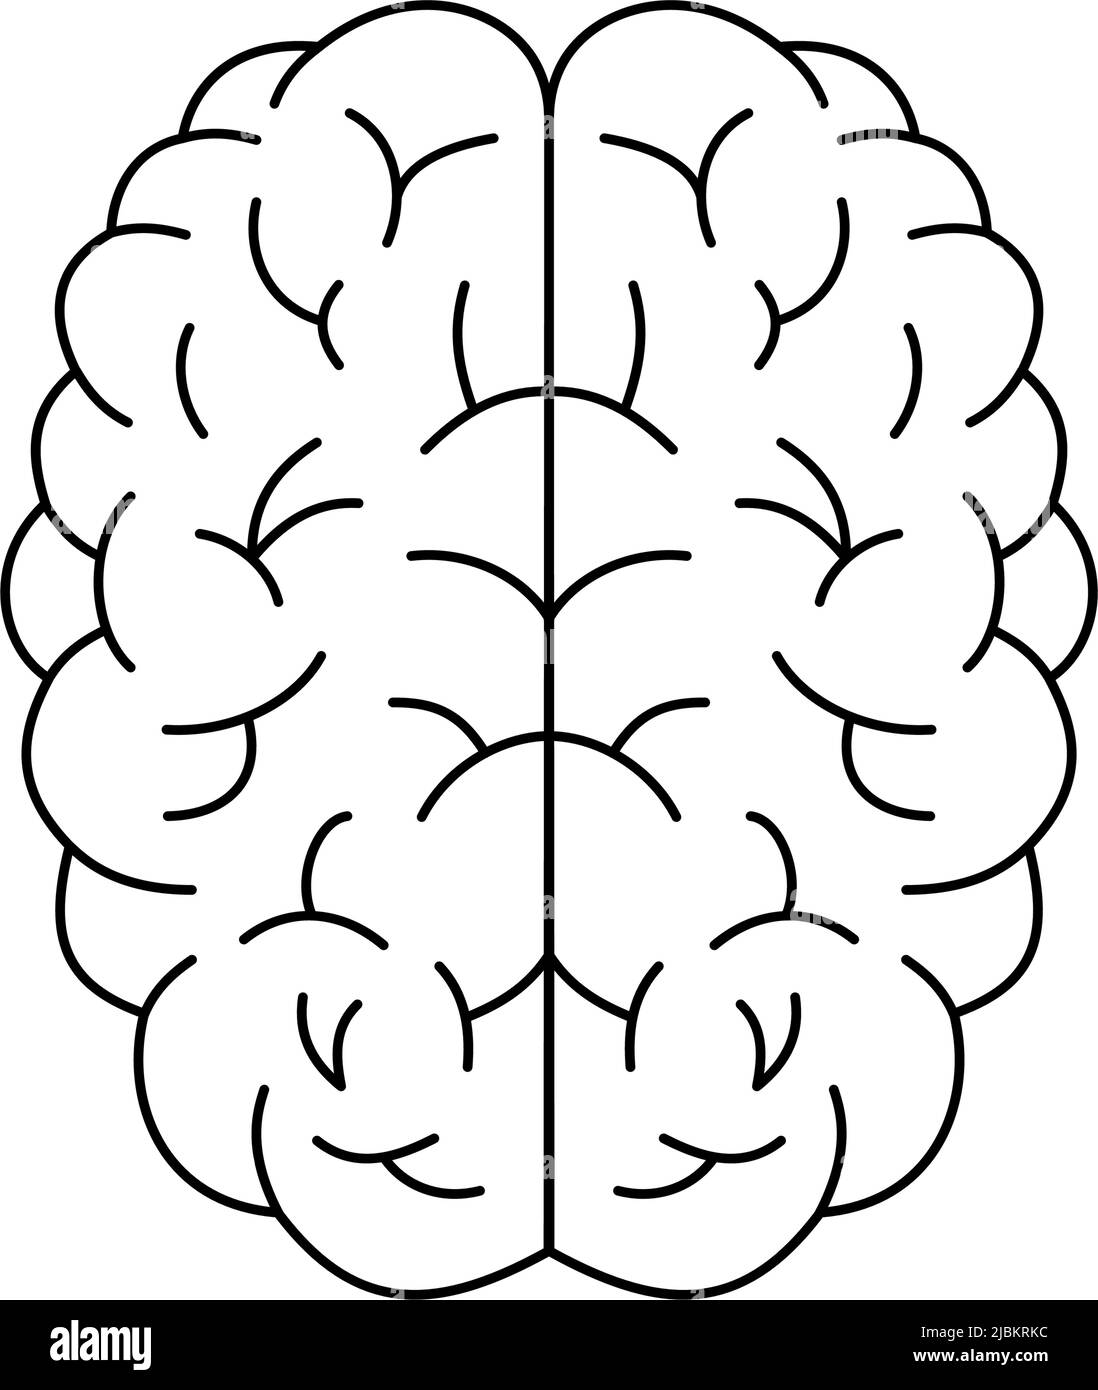 Human brain line icon. Brain symbol. Healthy internal organ sign. Stock Vector